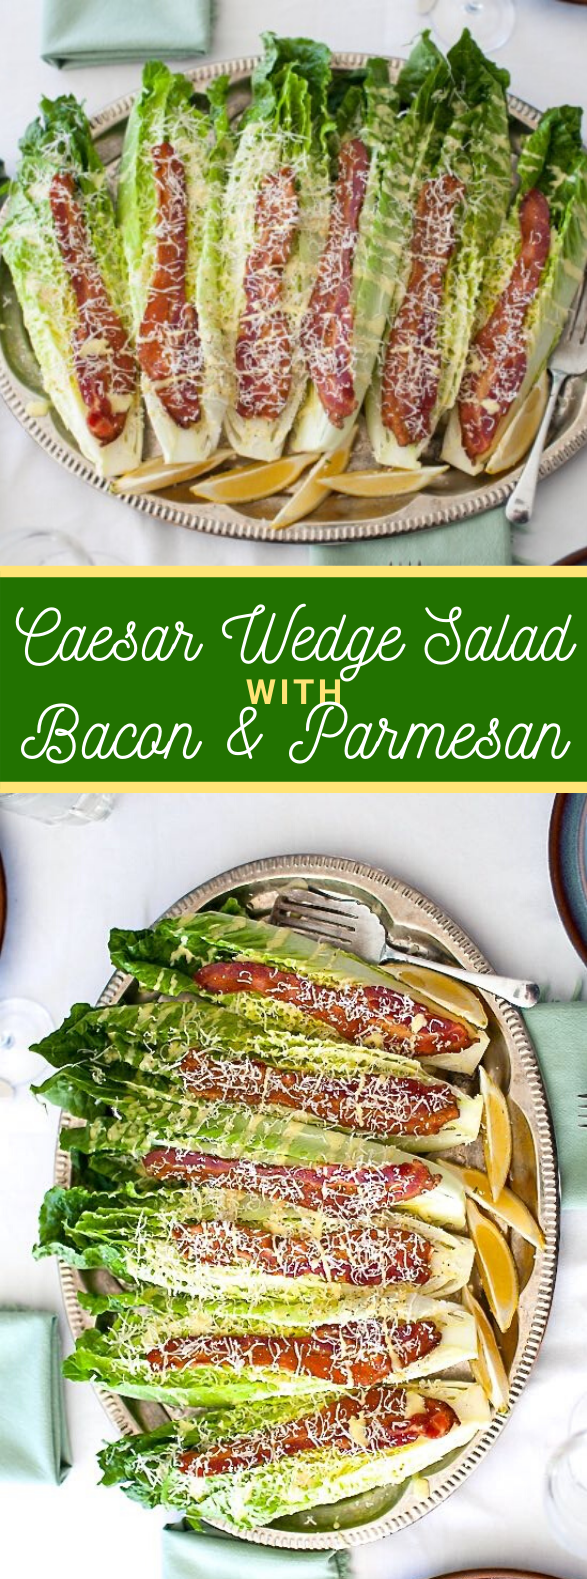 Caesar Wedge Salad with Bacon #veggies #vegetarian